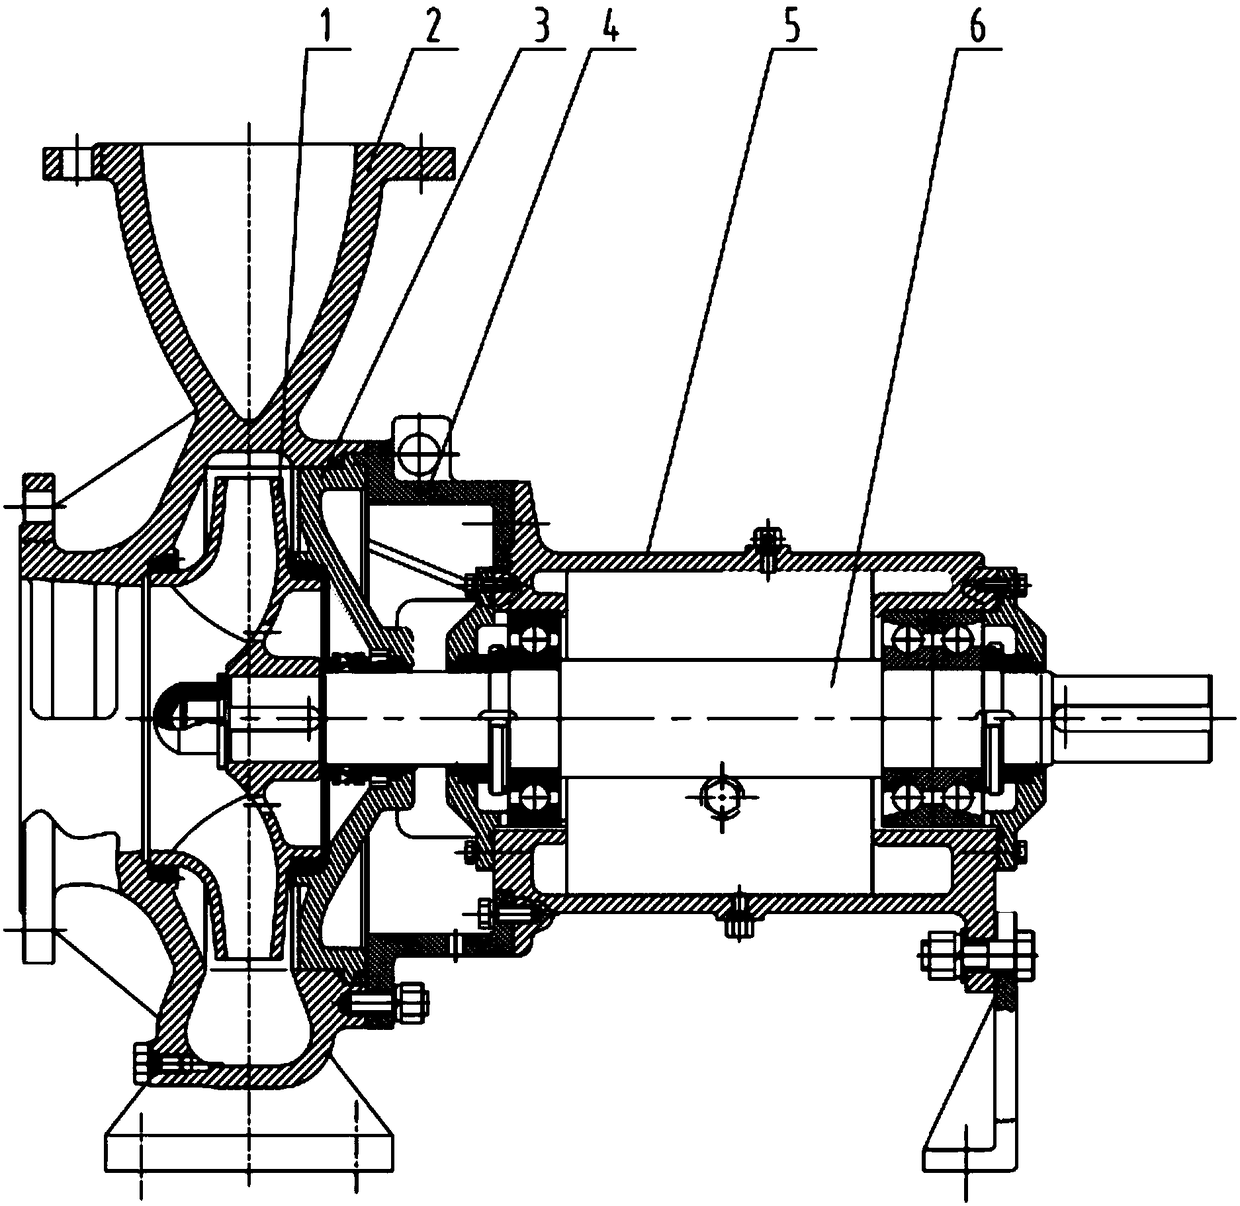 Constant-pressure type centrifugal pump